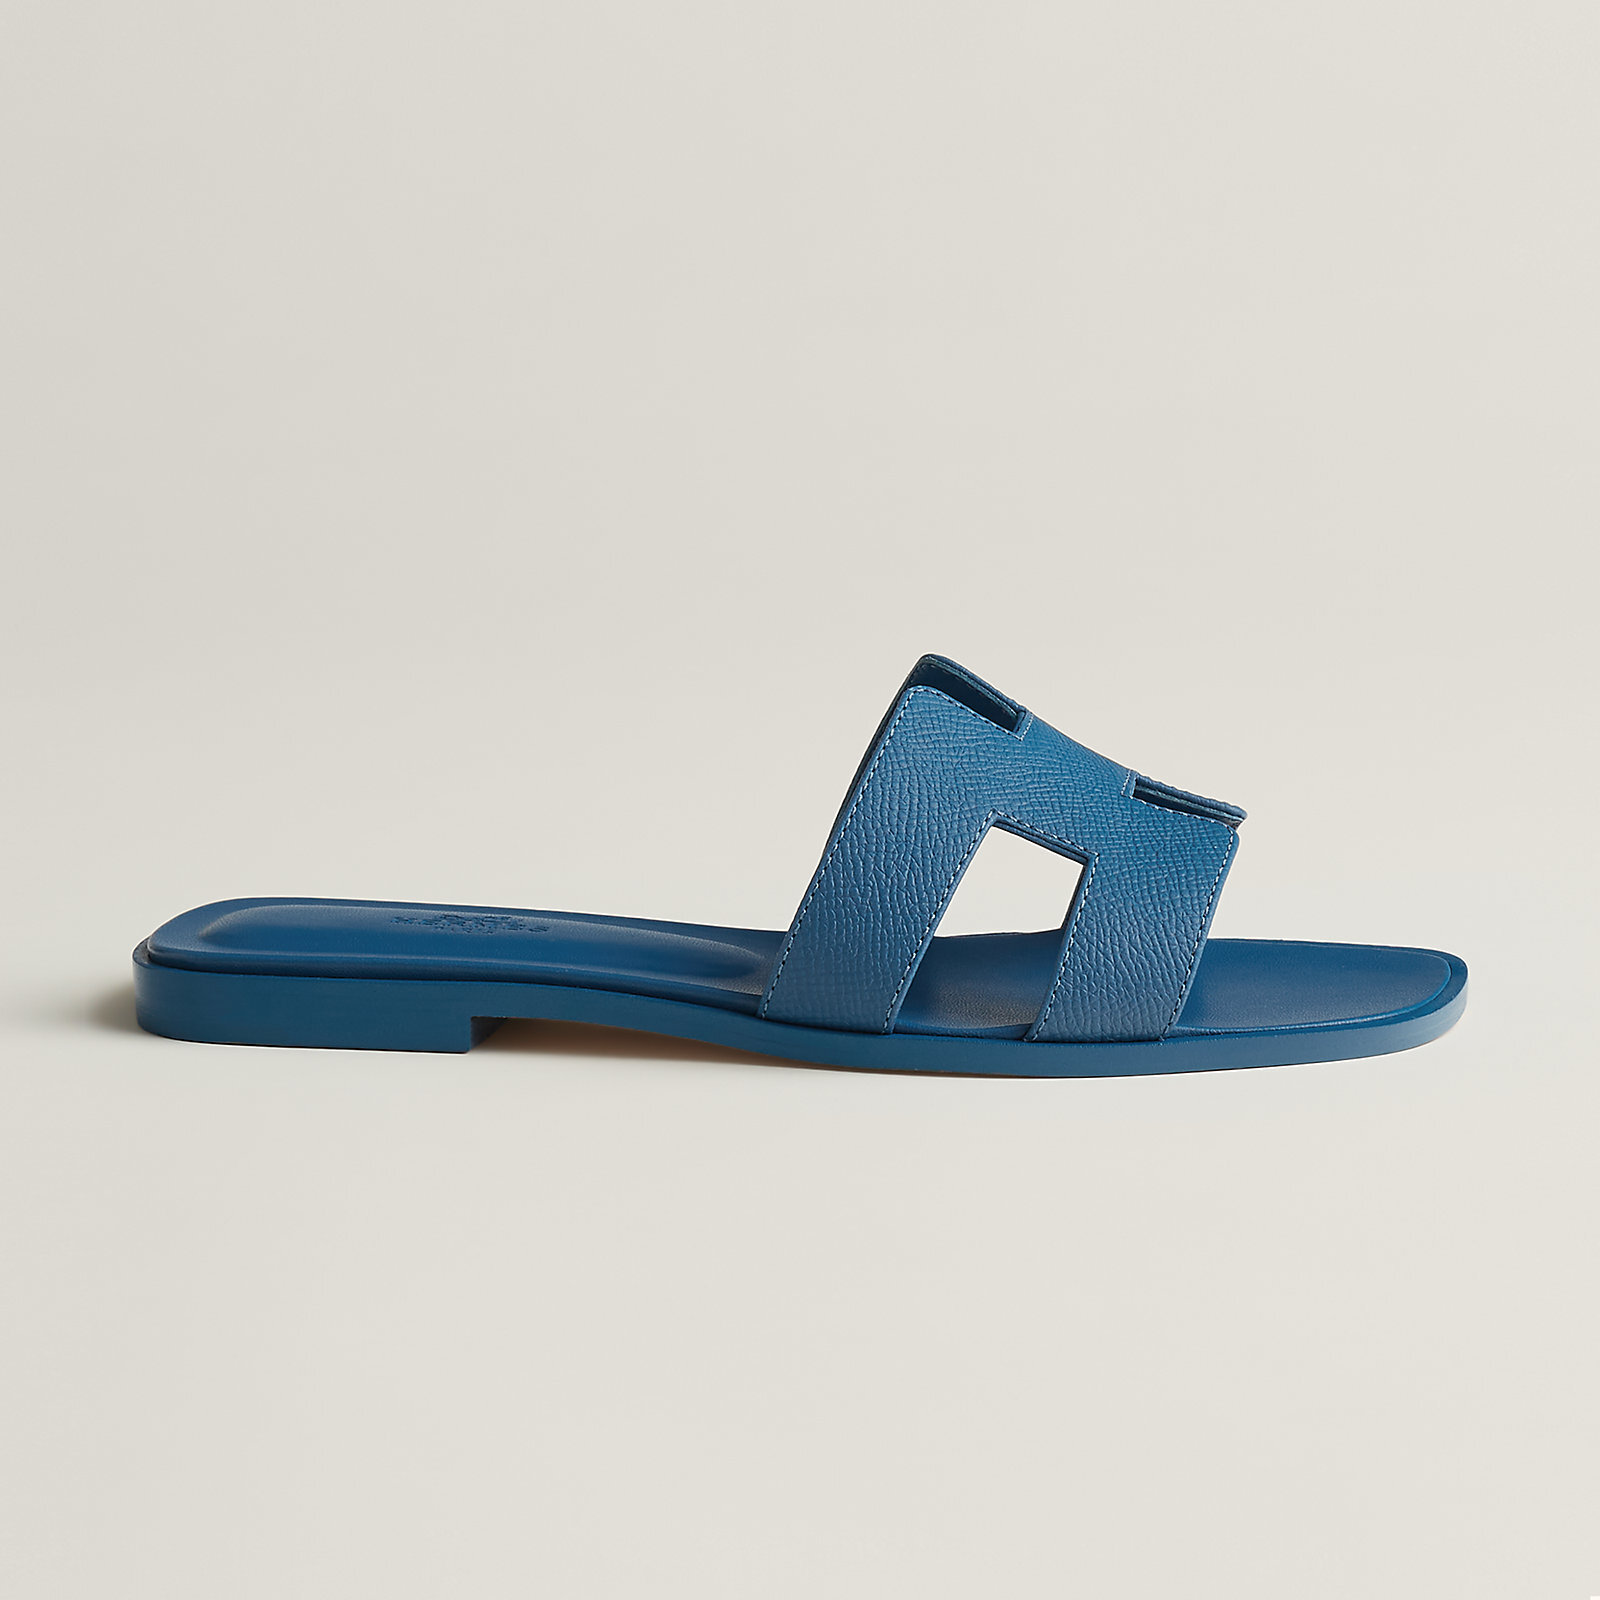 Hermès Oran Sandals Bleu Glacier Size 38